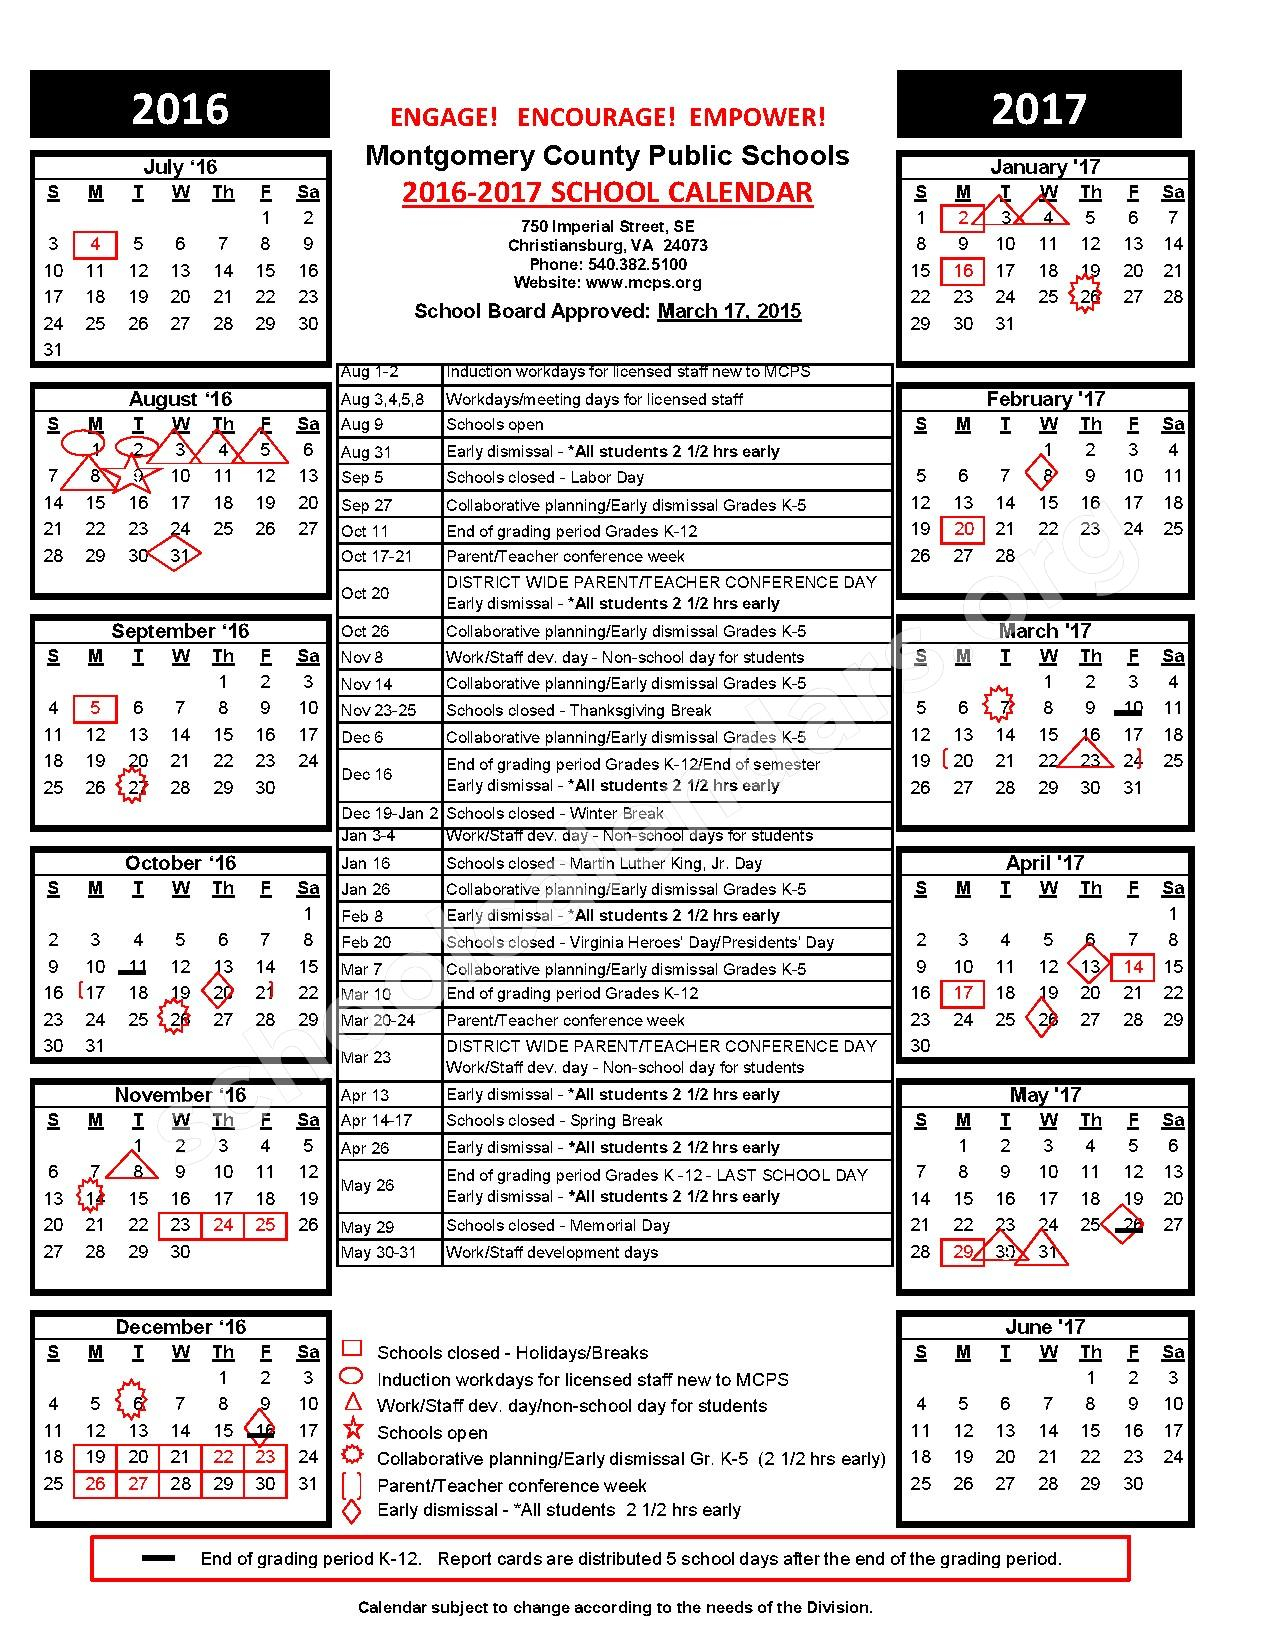 Montgomery County Va Calendar CountyCalendars net